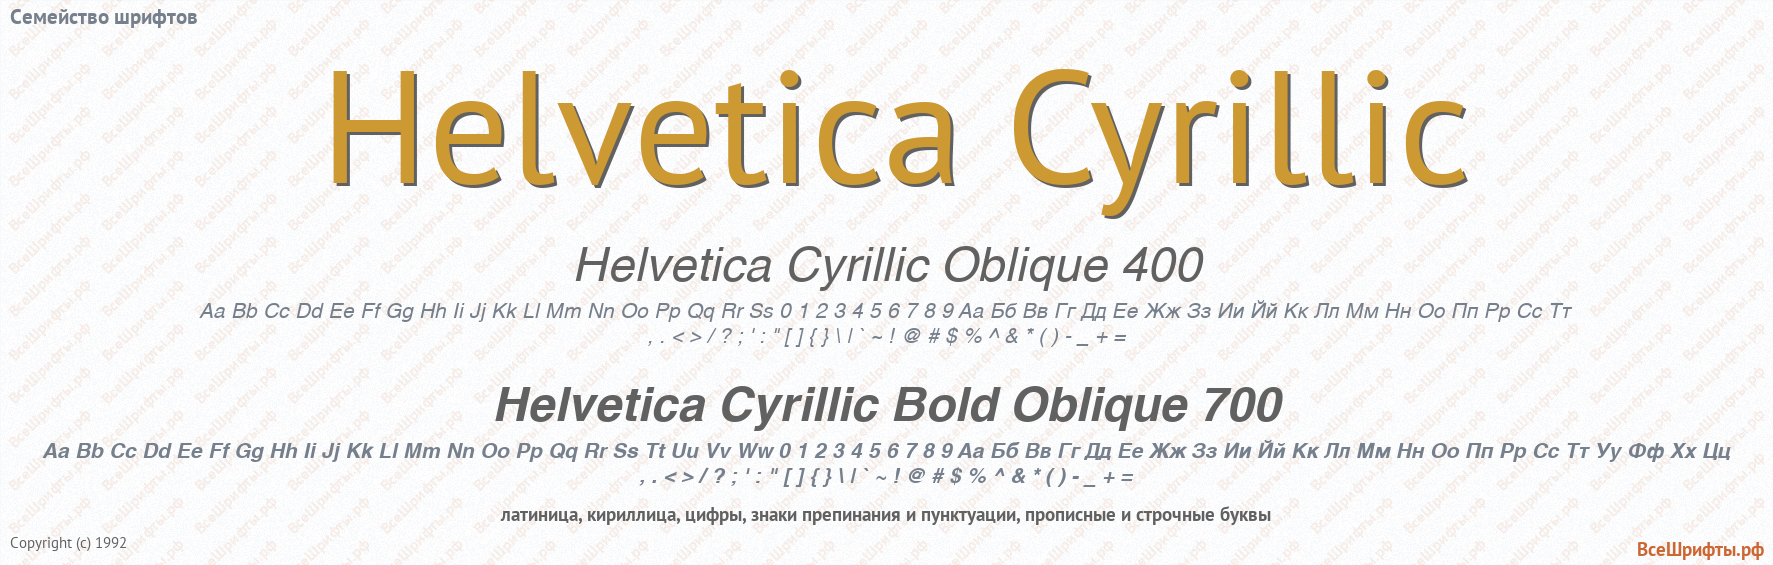 Шрифт helvetica neue cyr. Helvetica Cyrillic. Helvetica кириллица. Helvetica шрифт русский. Семейства шрифтов кириллица.